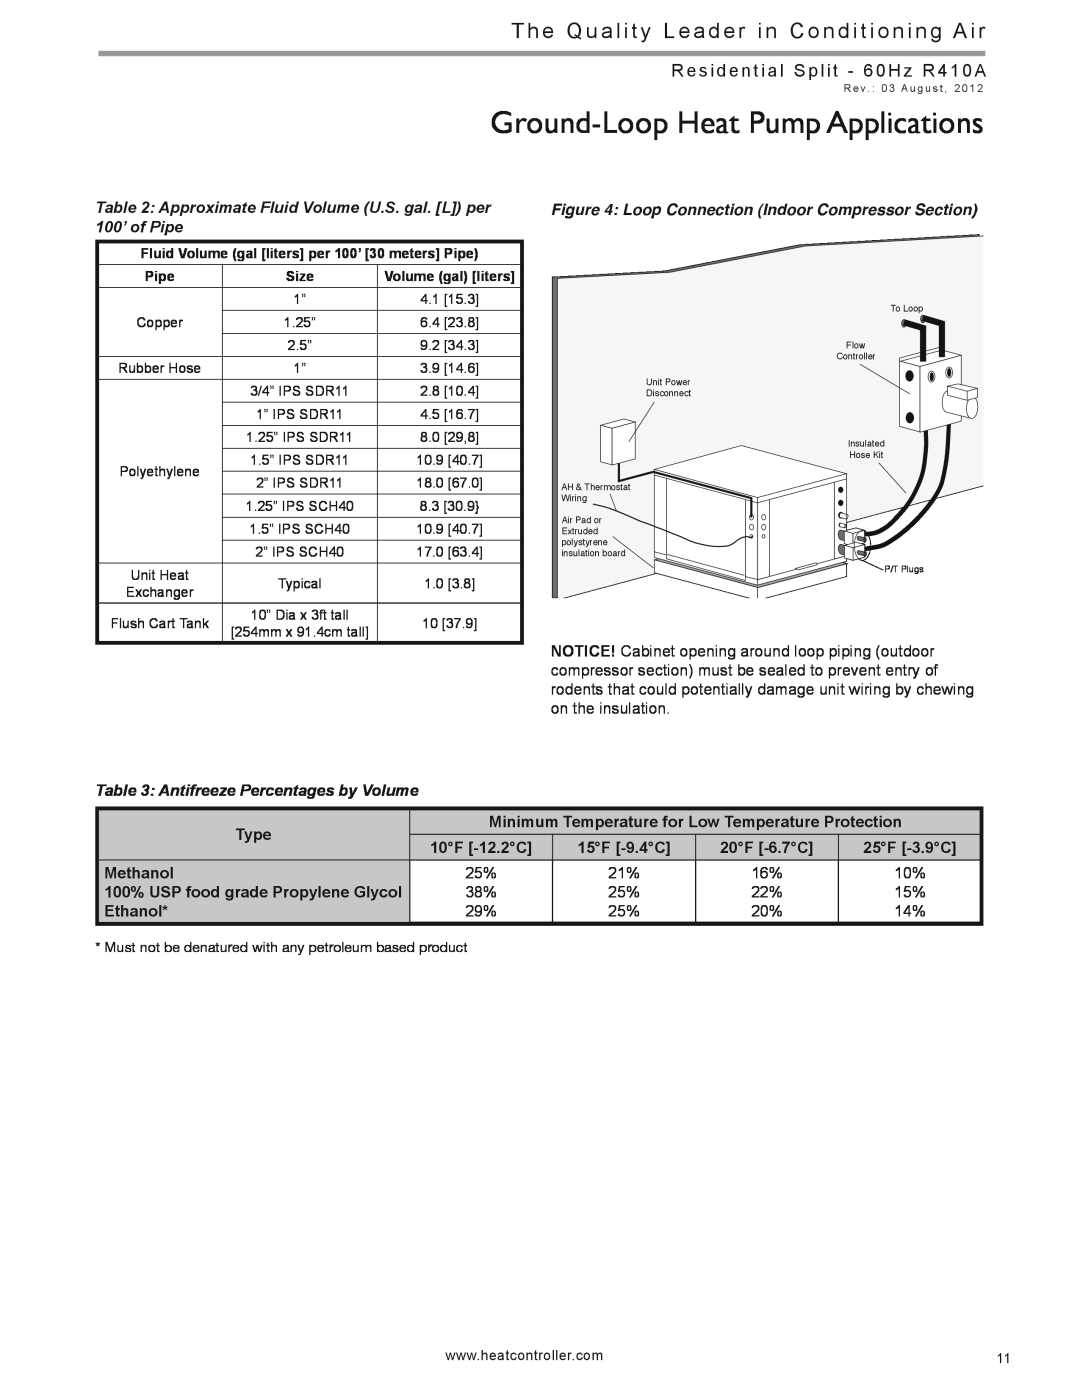 Heat Controller HTS SERIES Ground-LoopHeat Pump Applications, Type, 10F -12.2C, 15F -9.4C, 20F -6.7C, 25F -3.9C, Methanol 